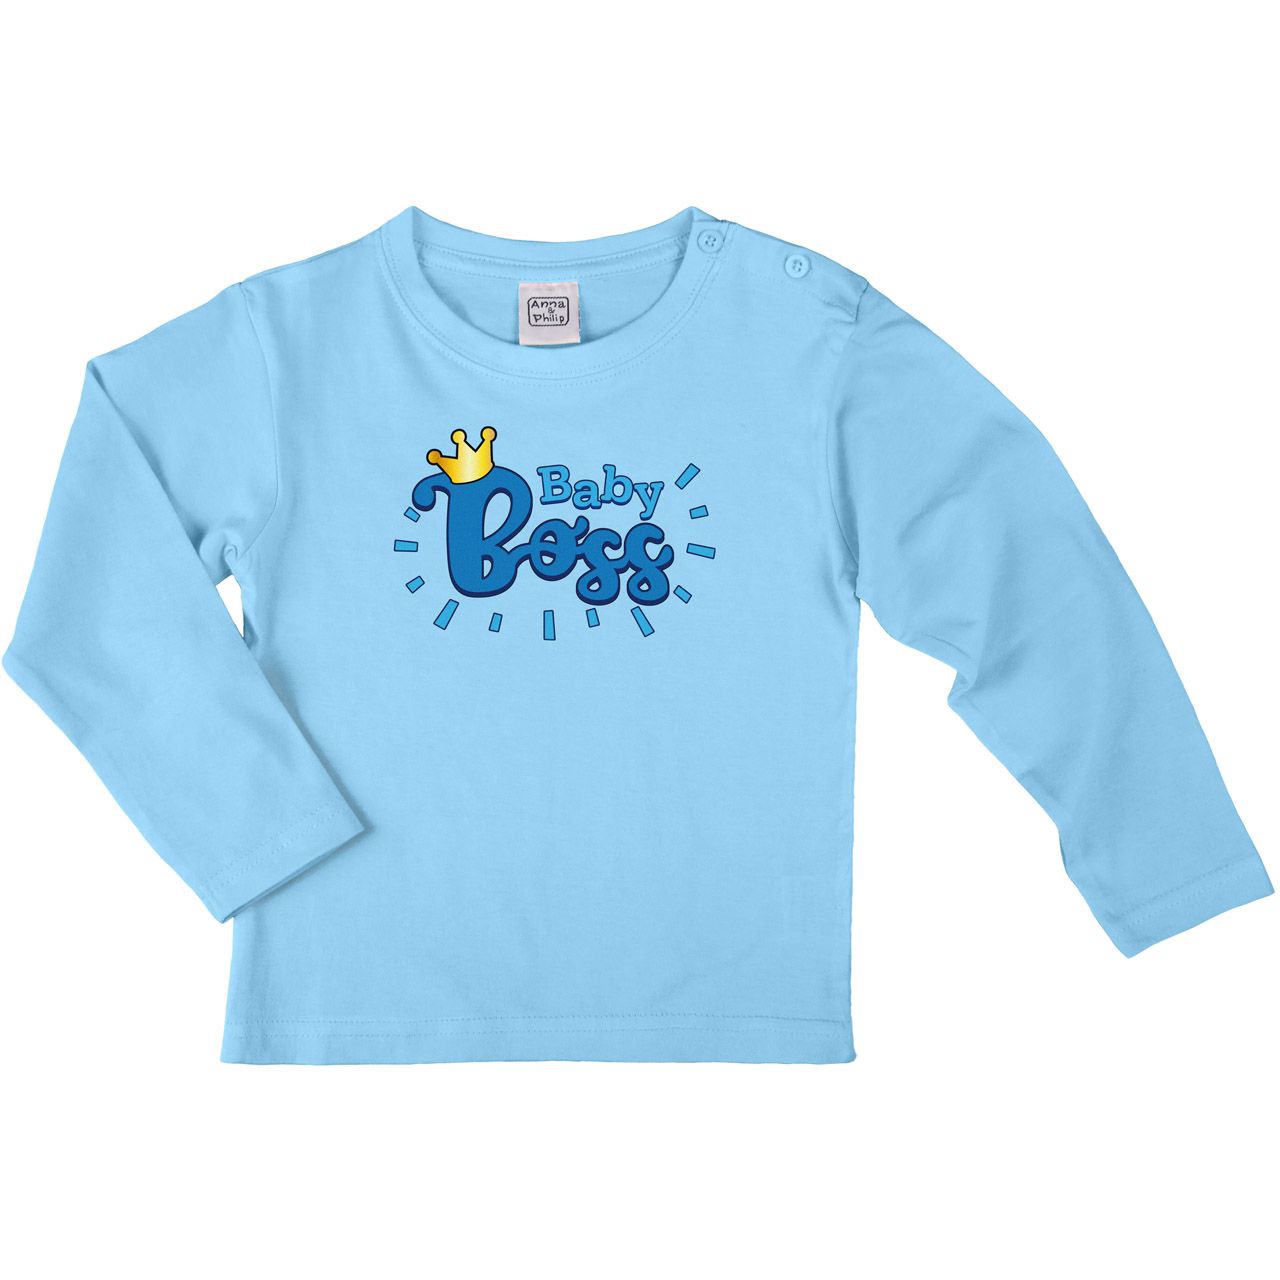 Baby Boss Blau Kinder Langarm Shirt hellblau 104